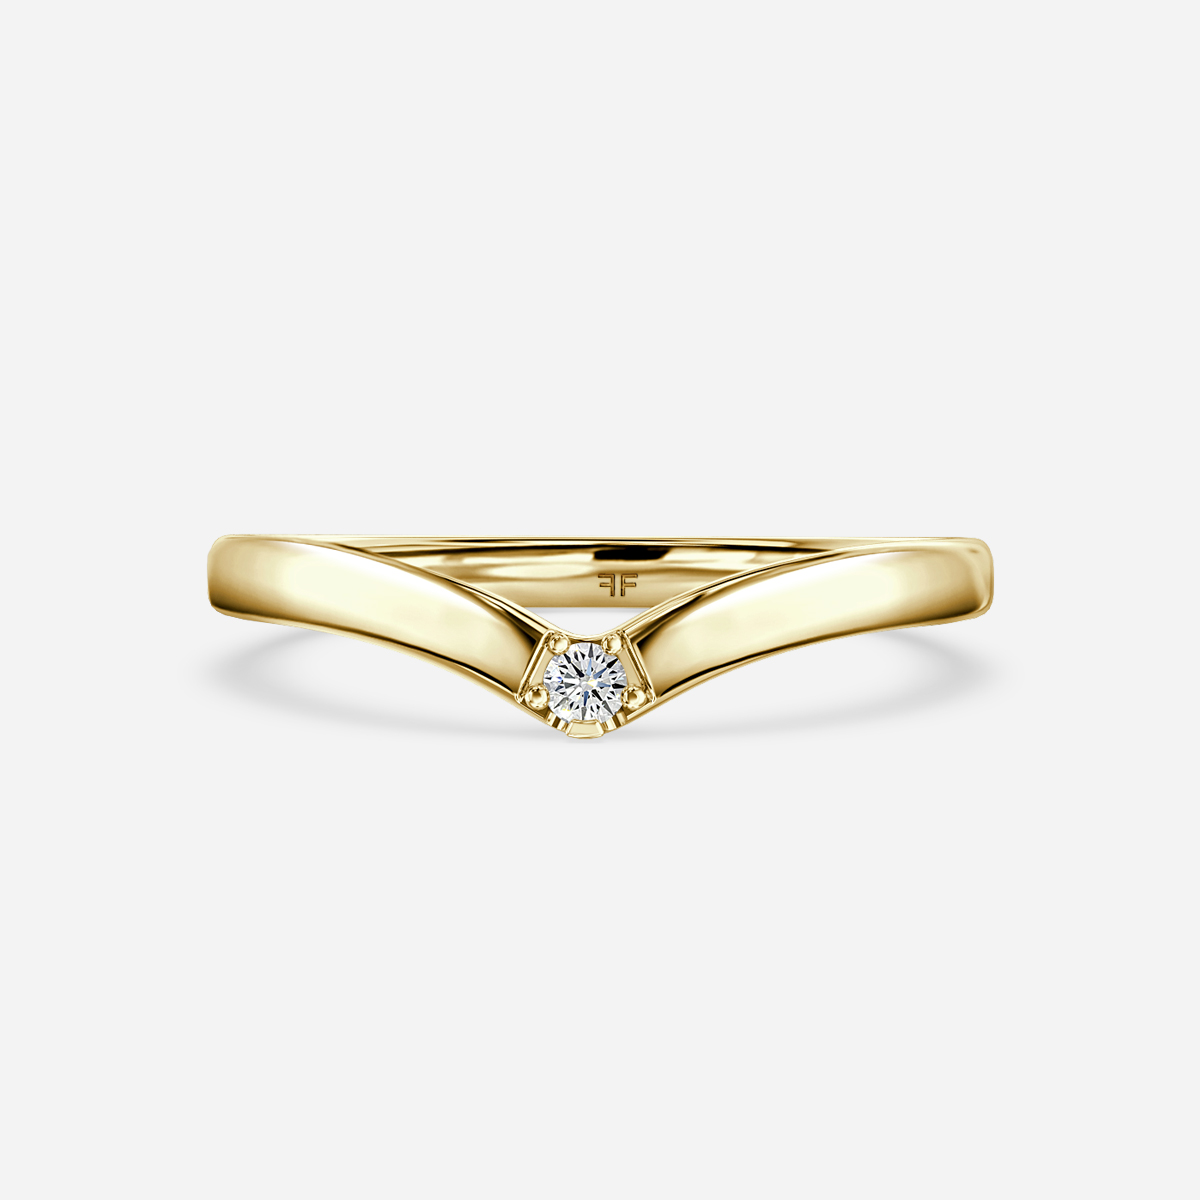 Women's yellow gold wedding rings